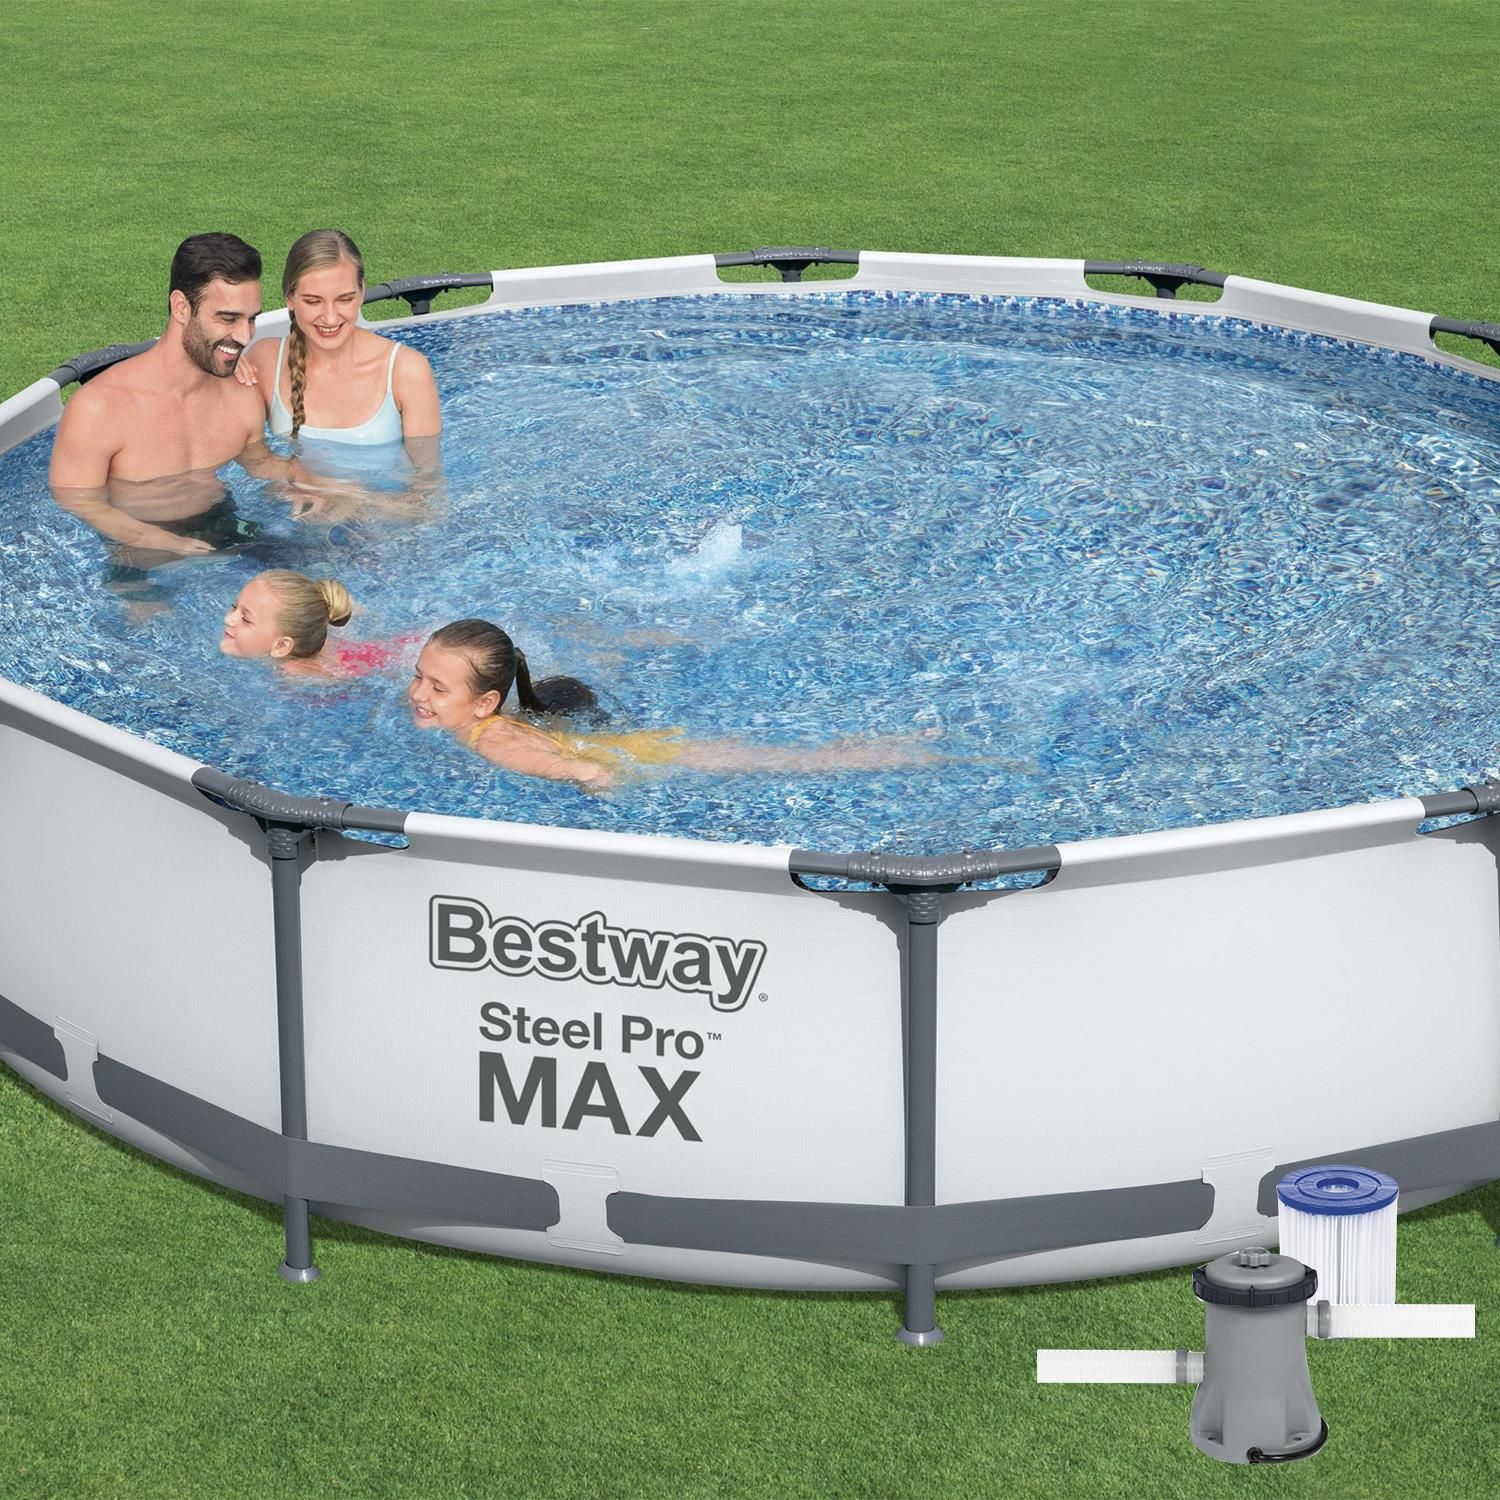 Bestway Steel Pro MAX 12' x 30